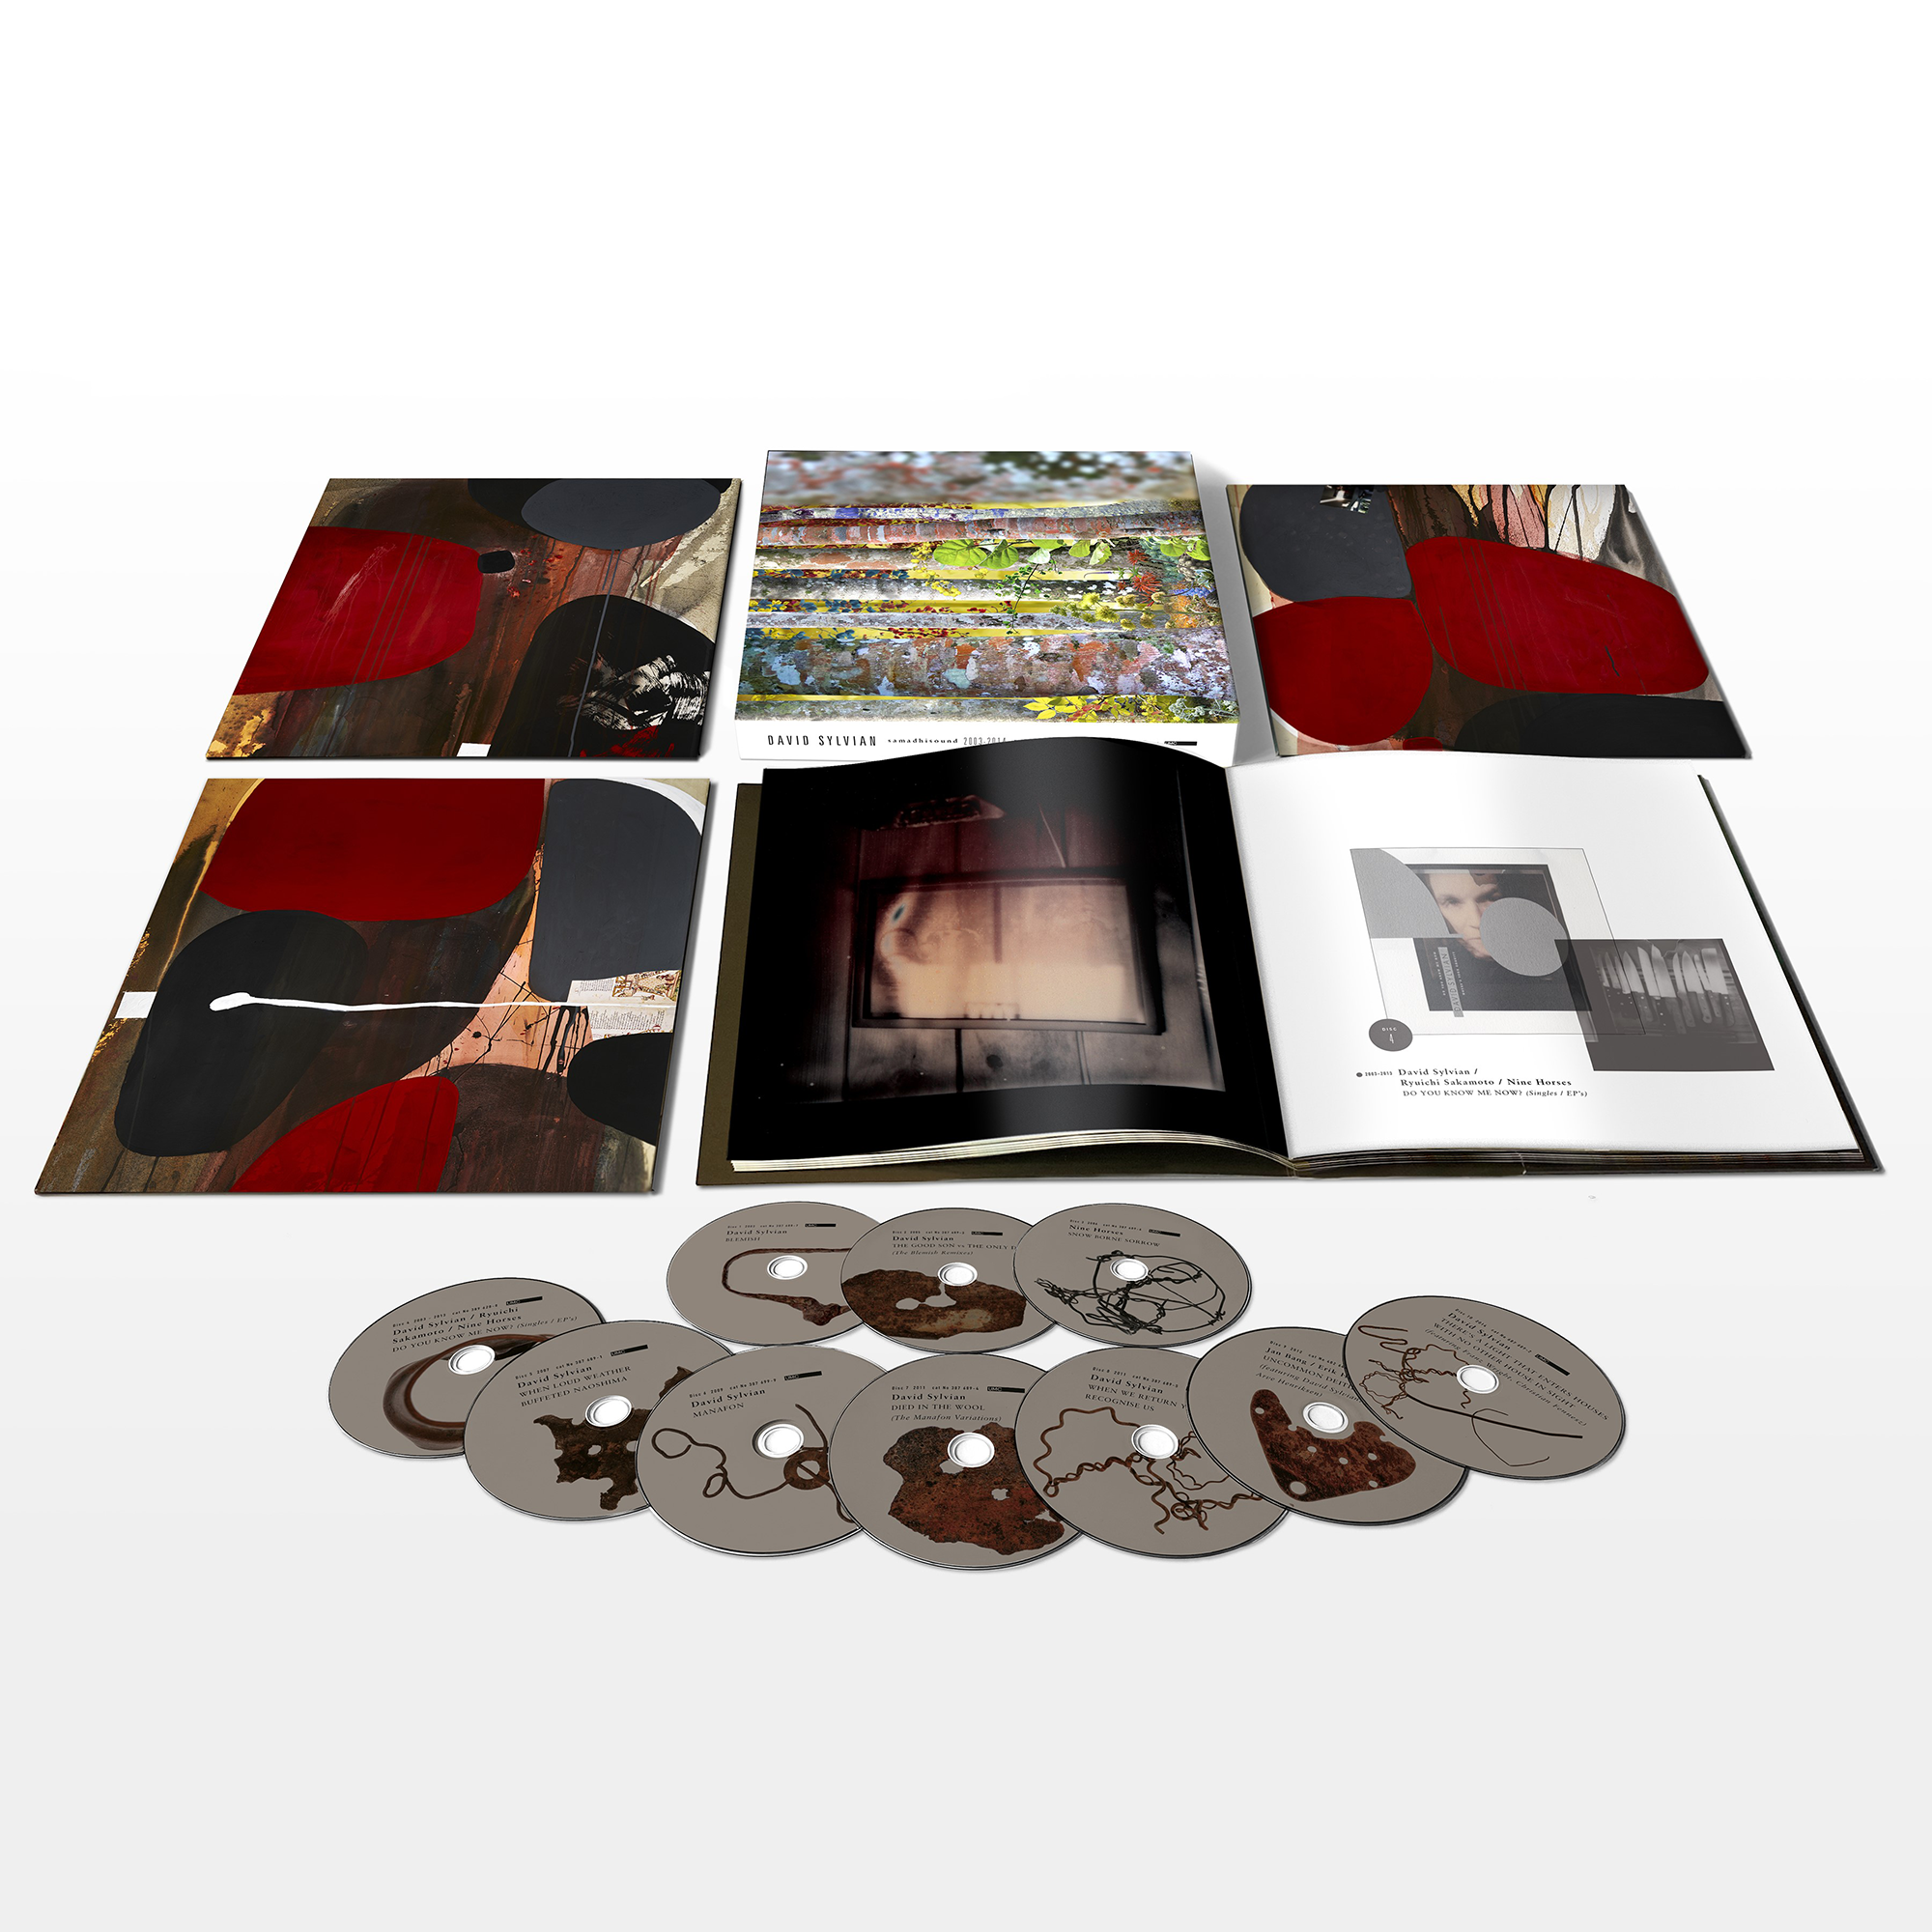 David Sylvian - Do You Know Me Now? (Exclusive 10CD Box Set) - David Sylvian